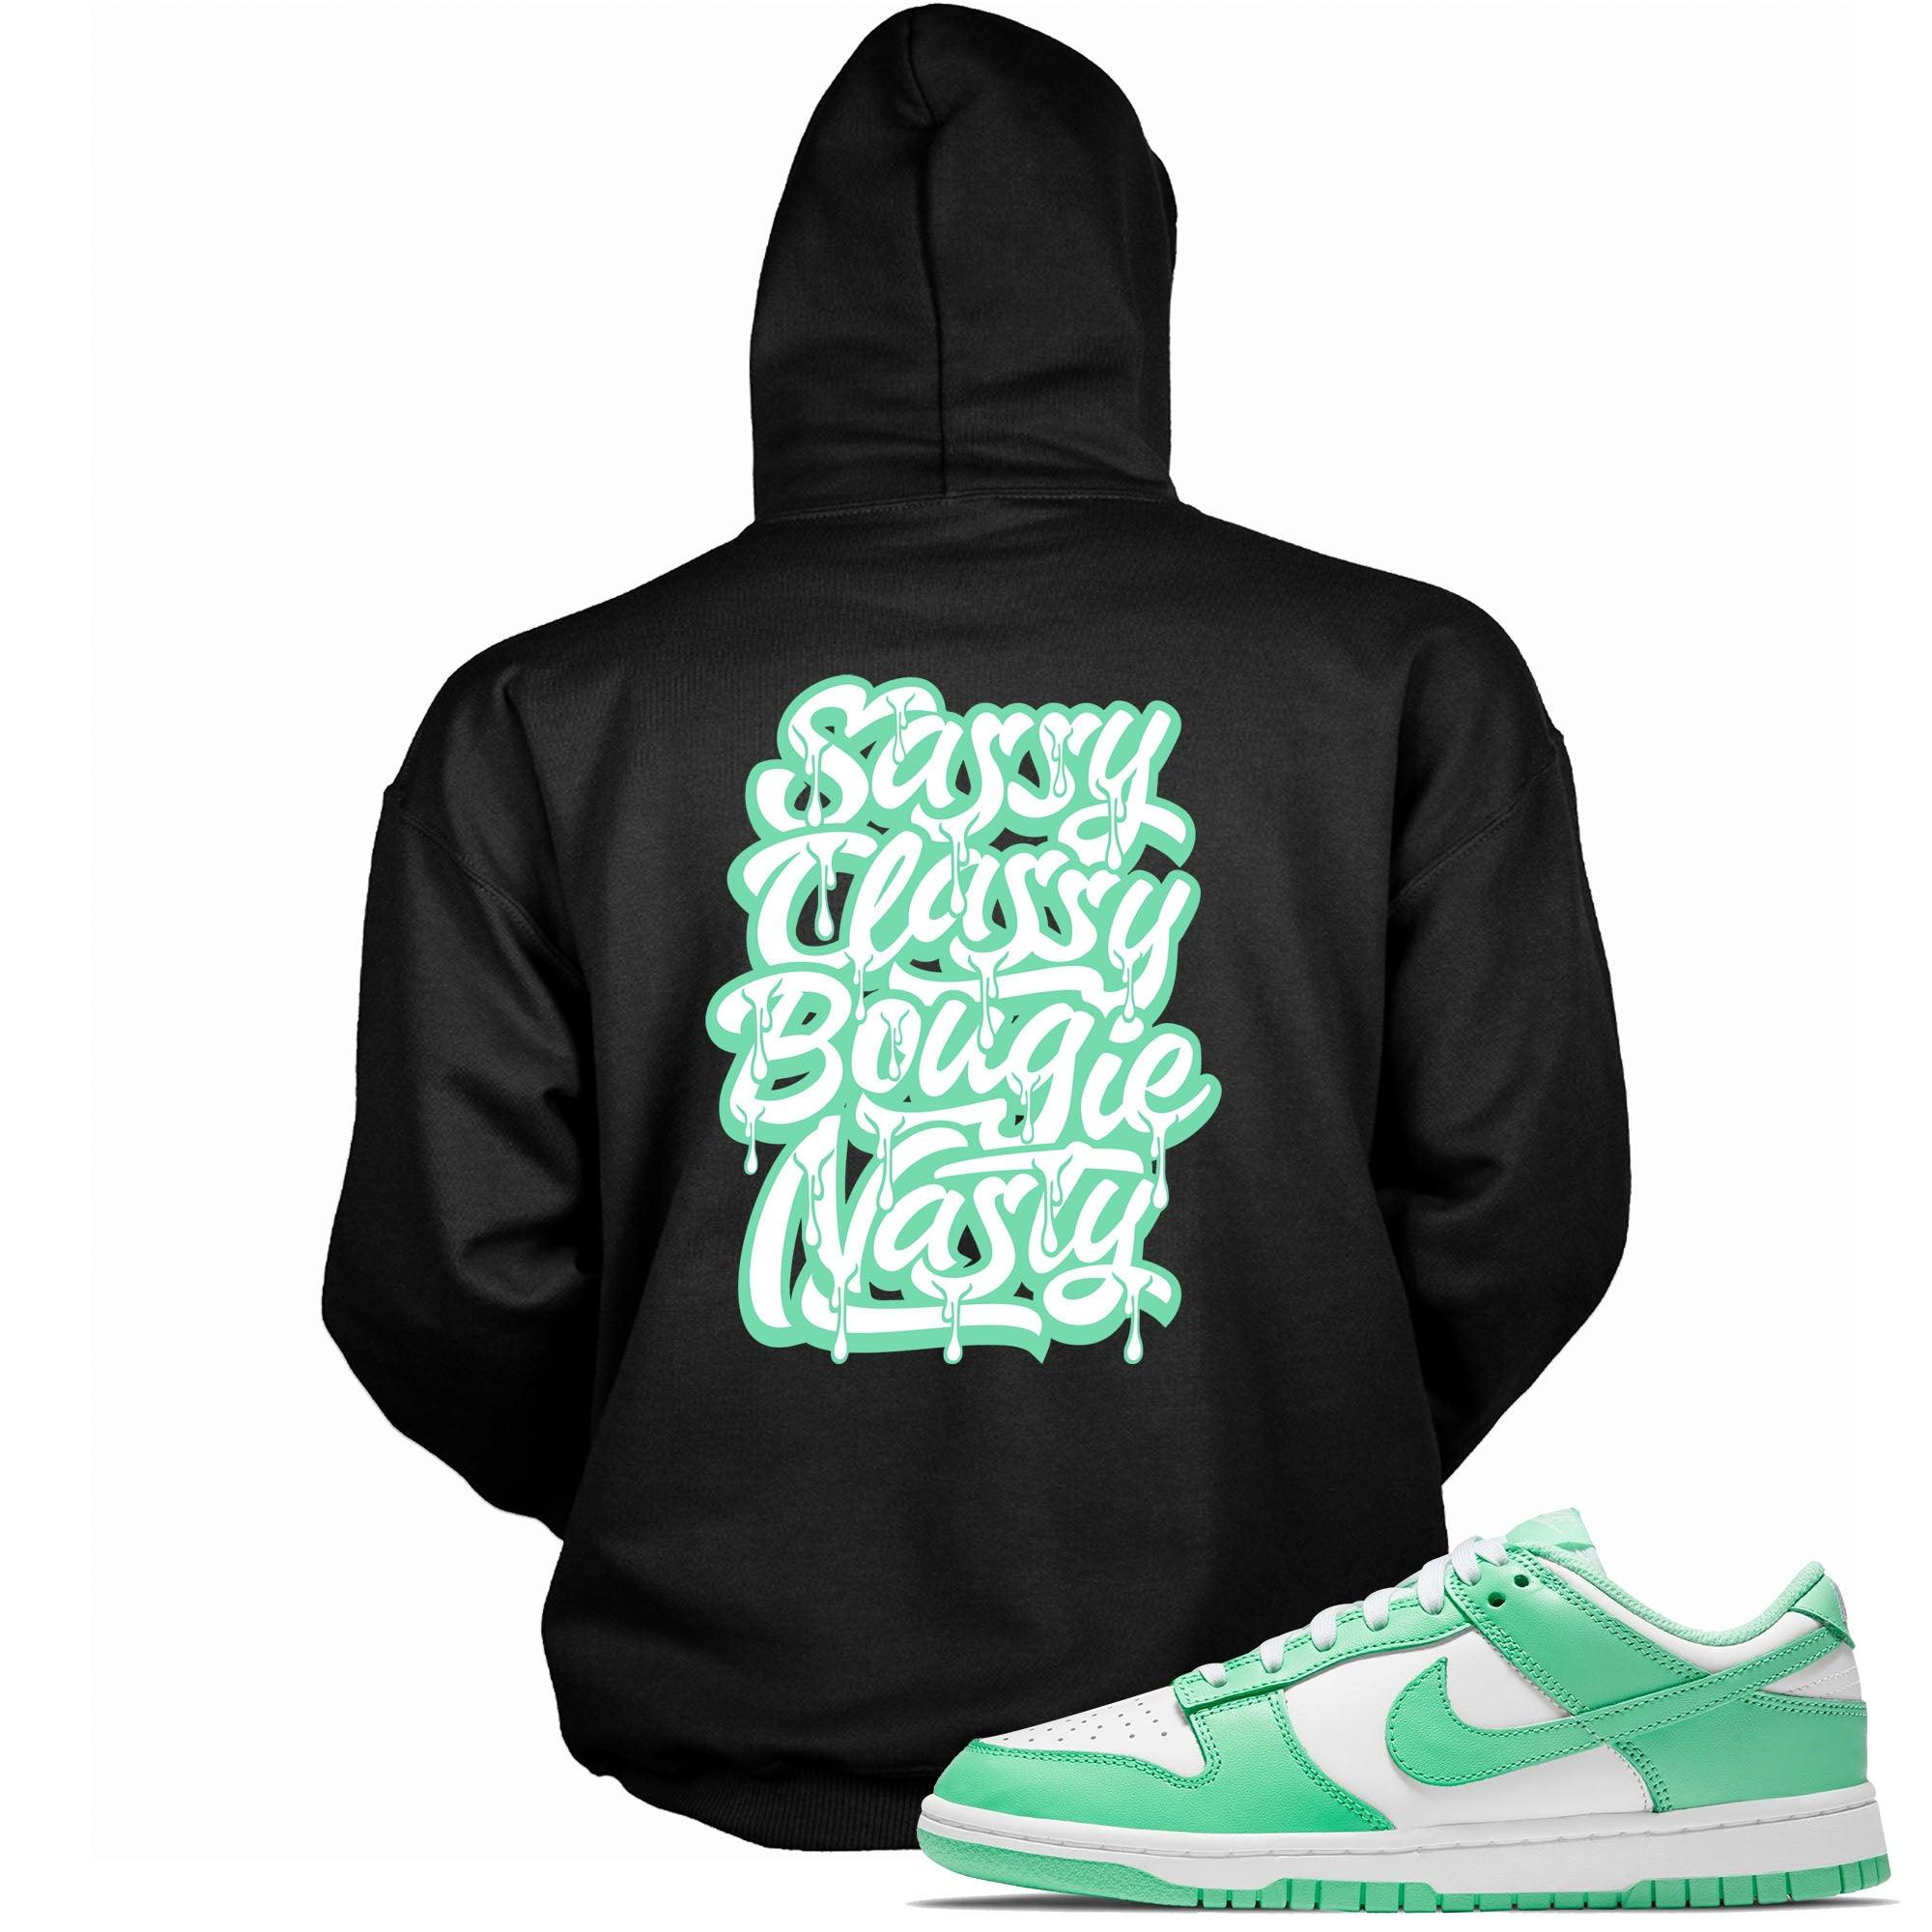 Sassy Classy Bougie Nasty Sneaker Sweatshirt Nike Dunk Low Green Glow photo